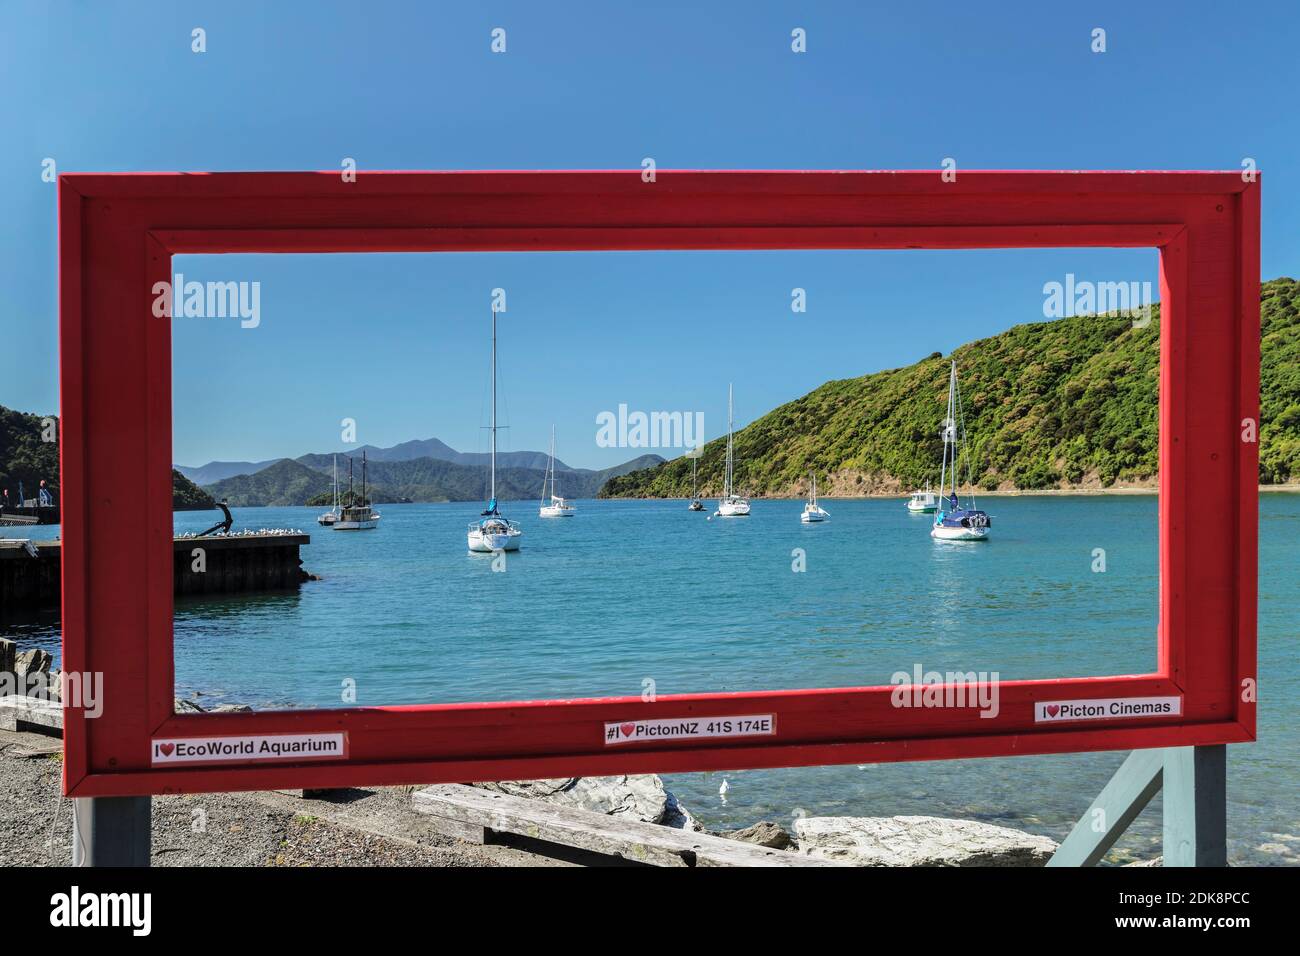 Sailboats in the harbor, Picton, Marlborough, South Island, New Zealand, Oceania Stock Photo